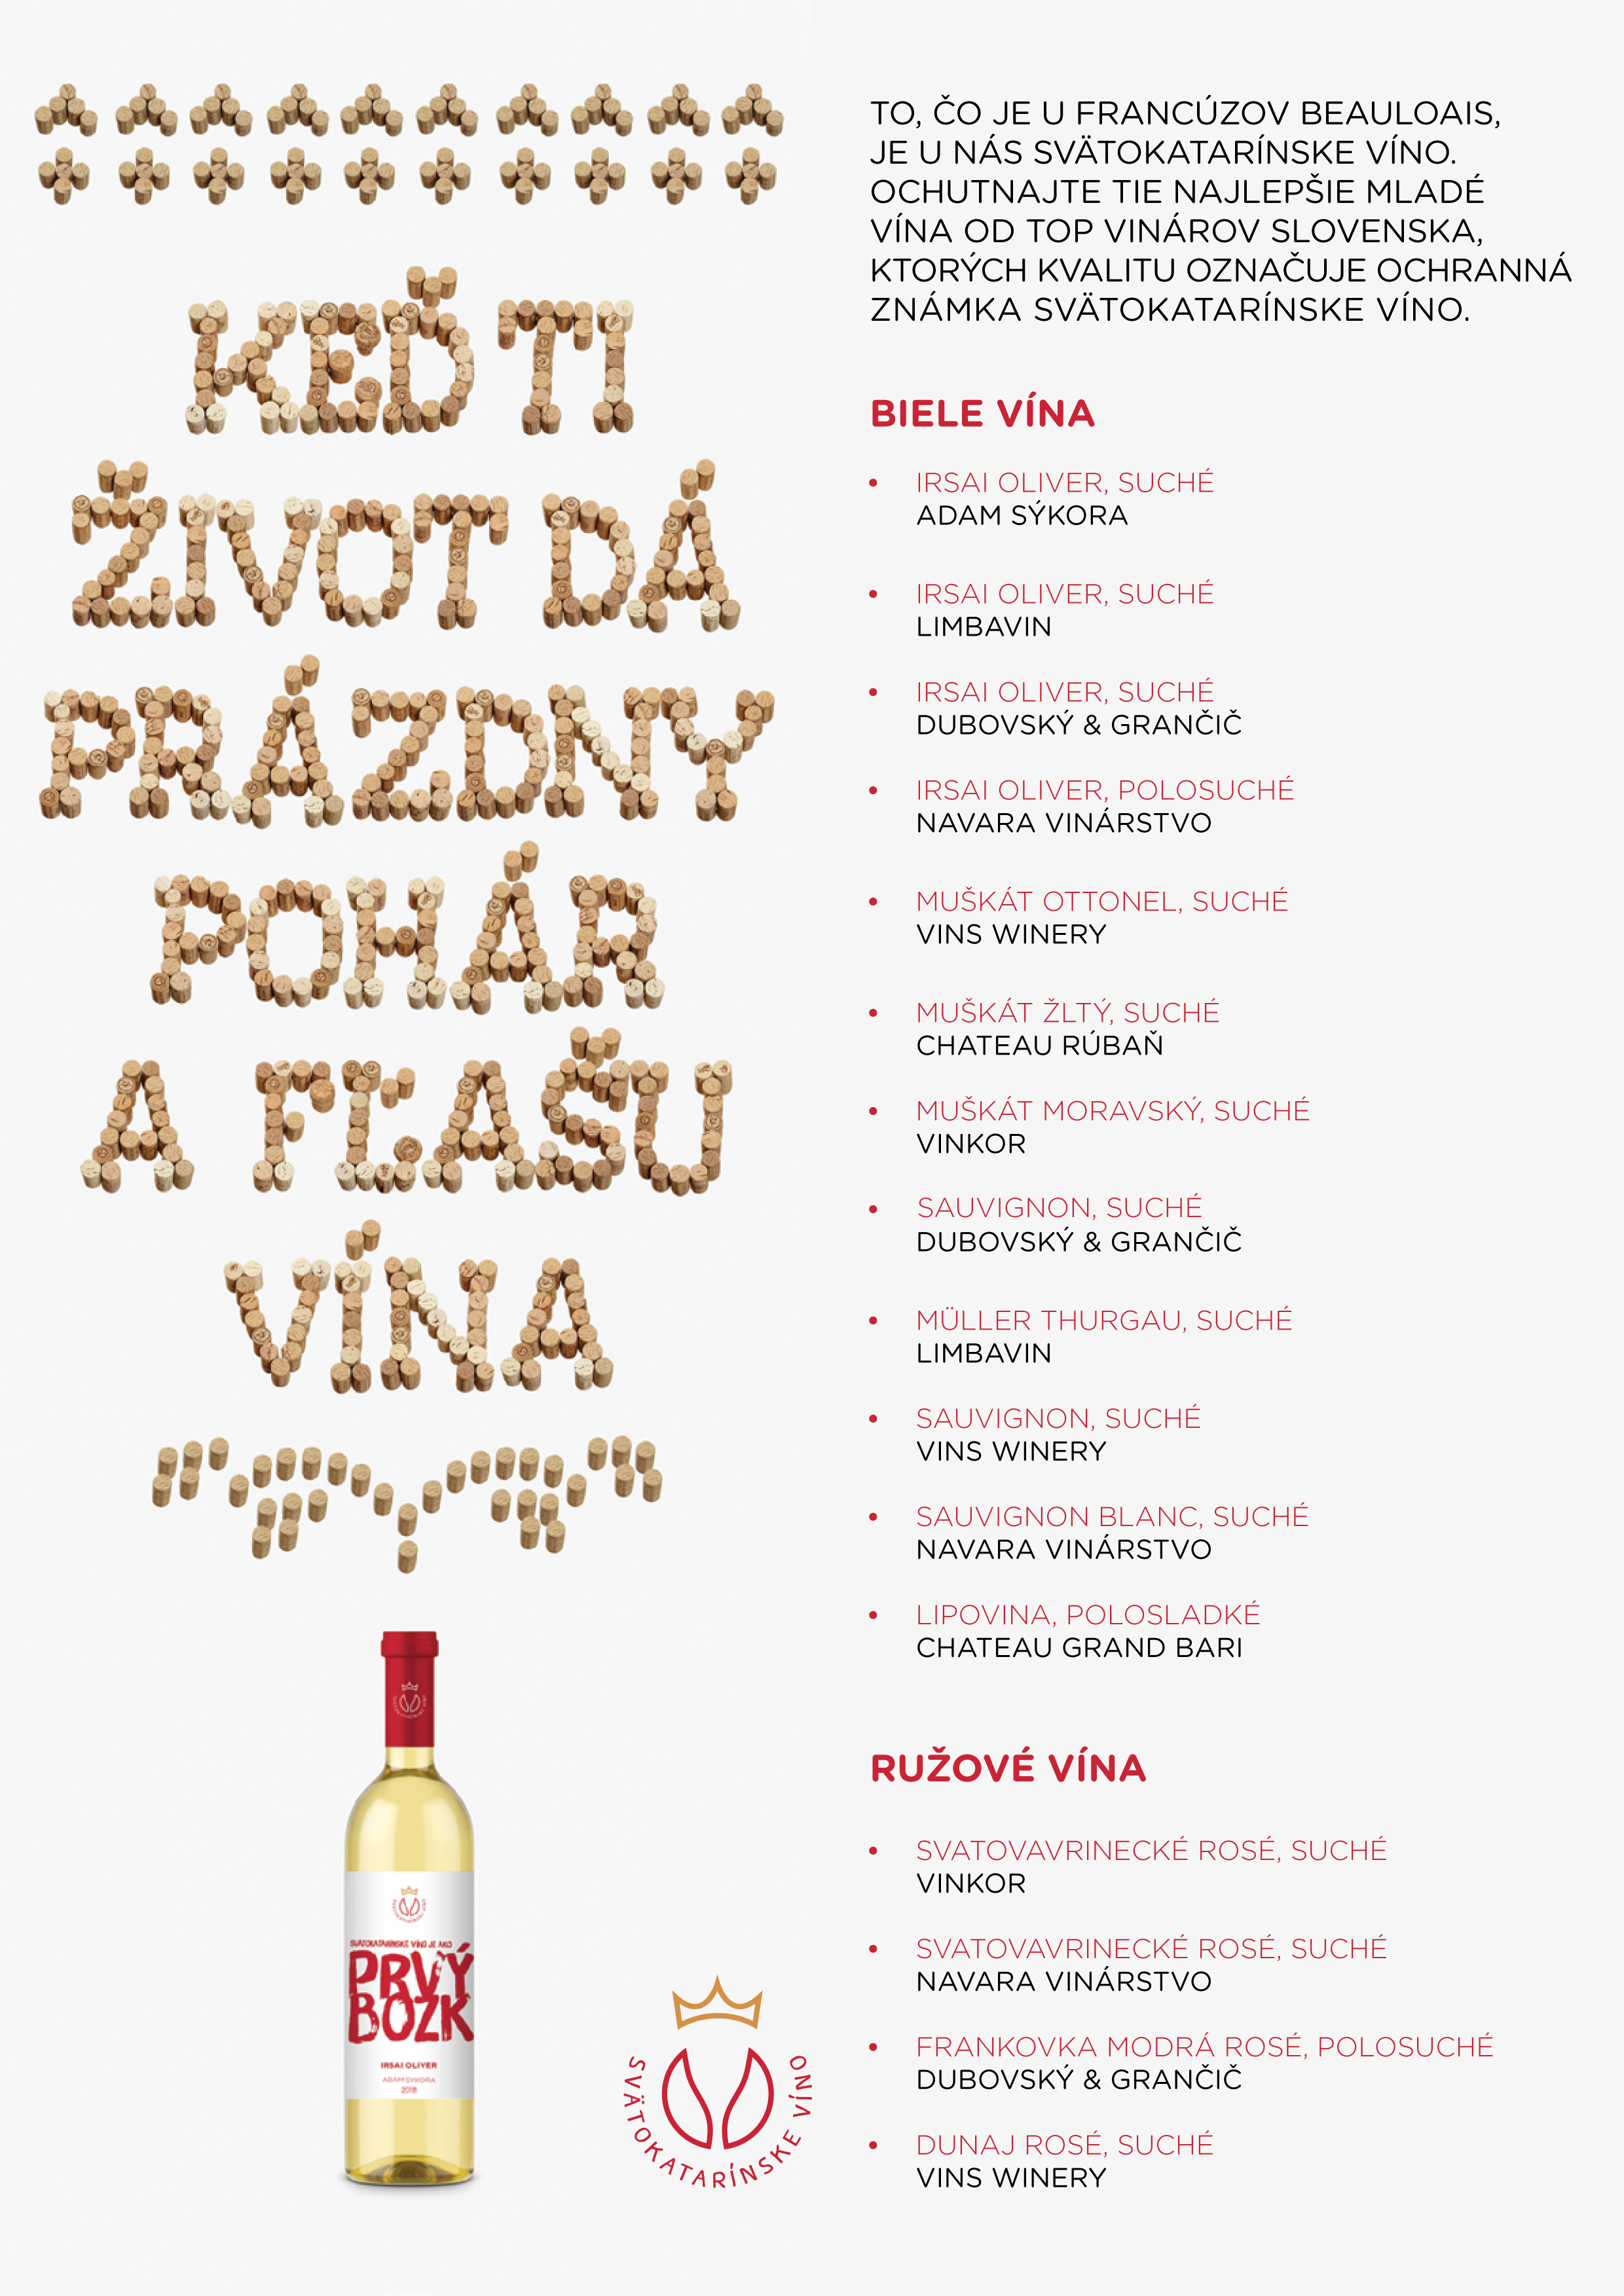 Svatokatarinske vina 2019